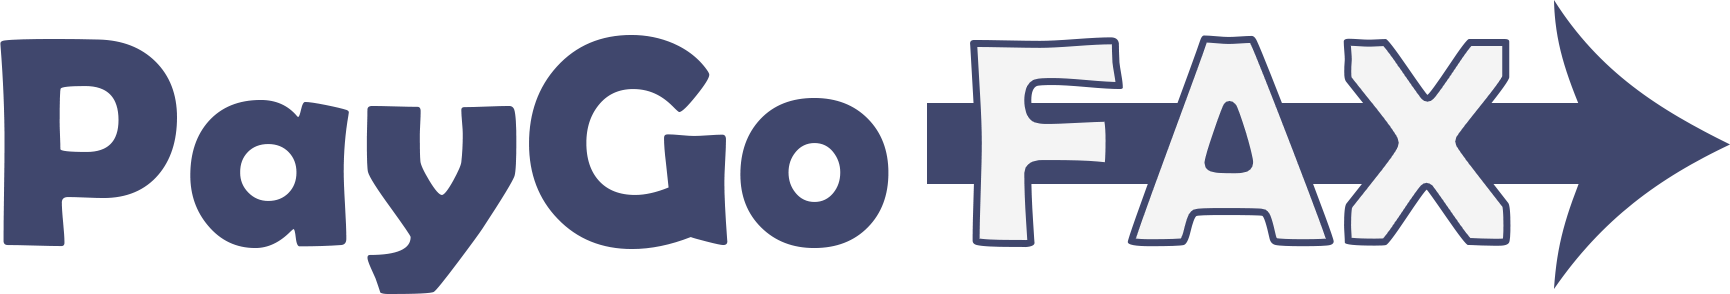 paygofax logo